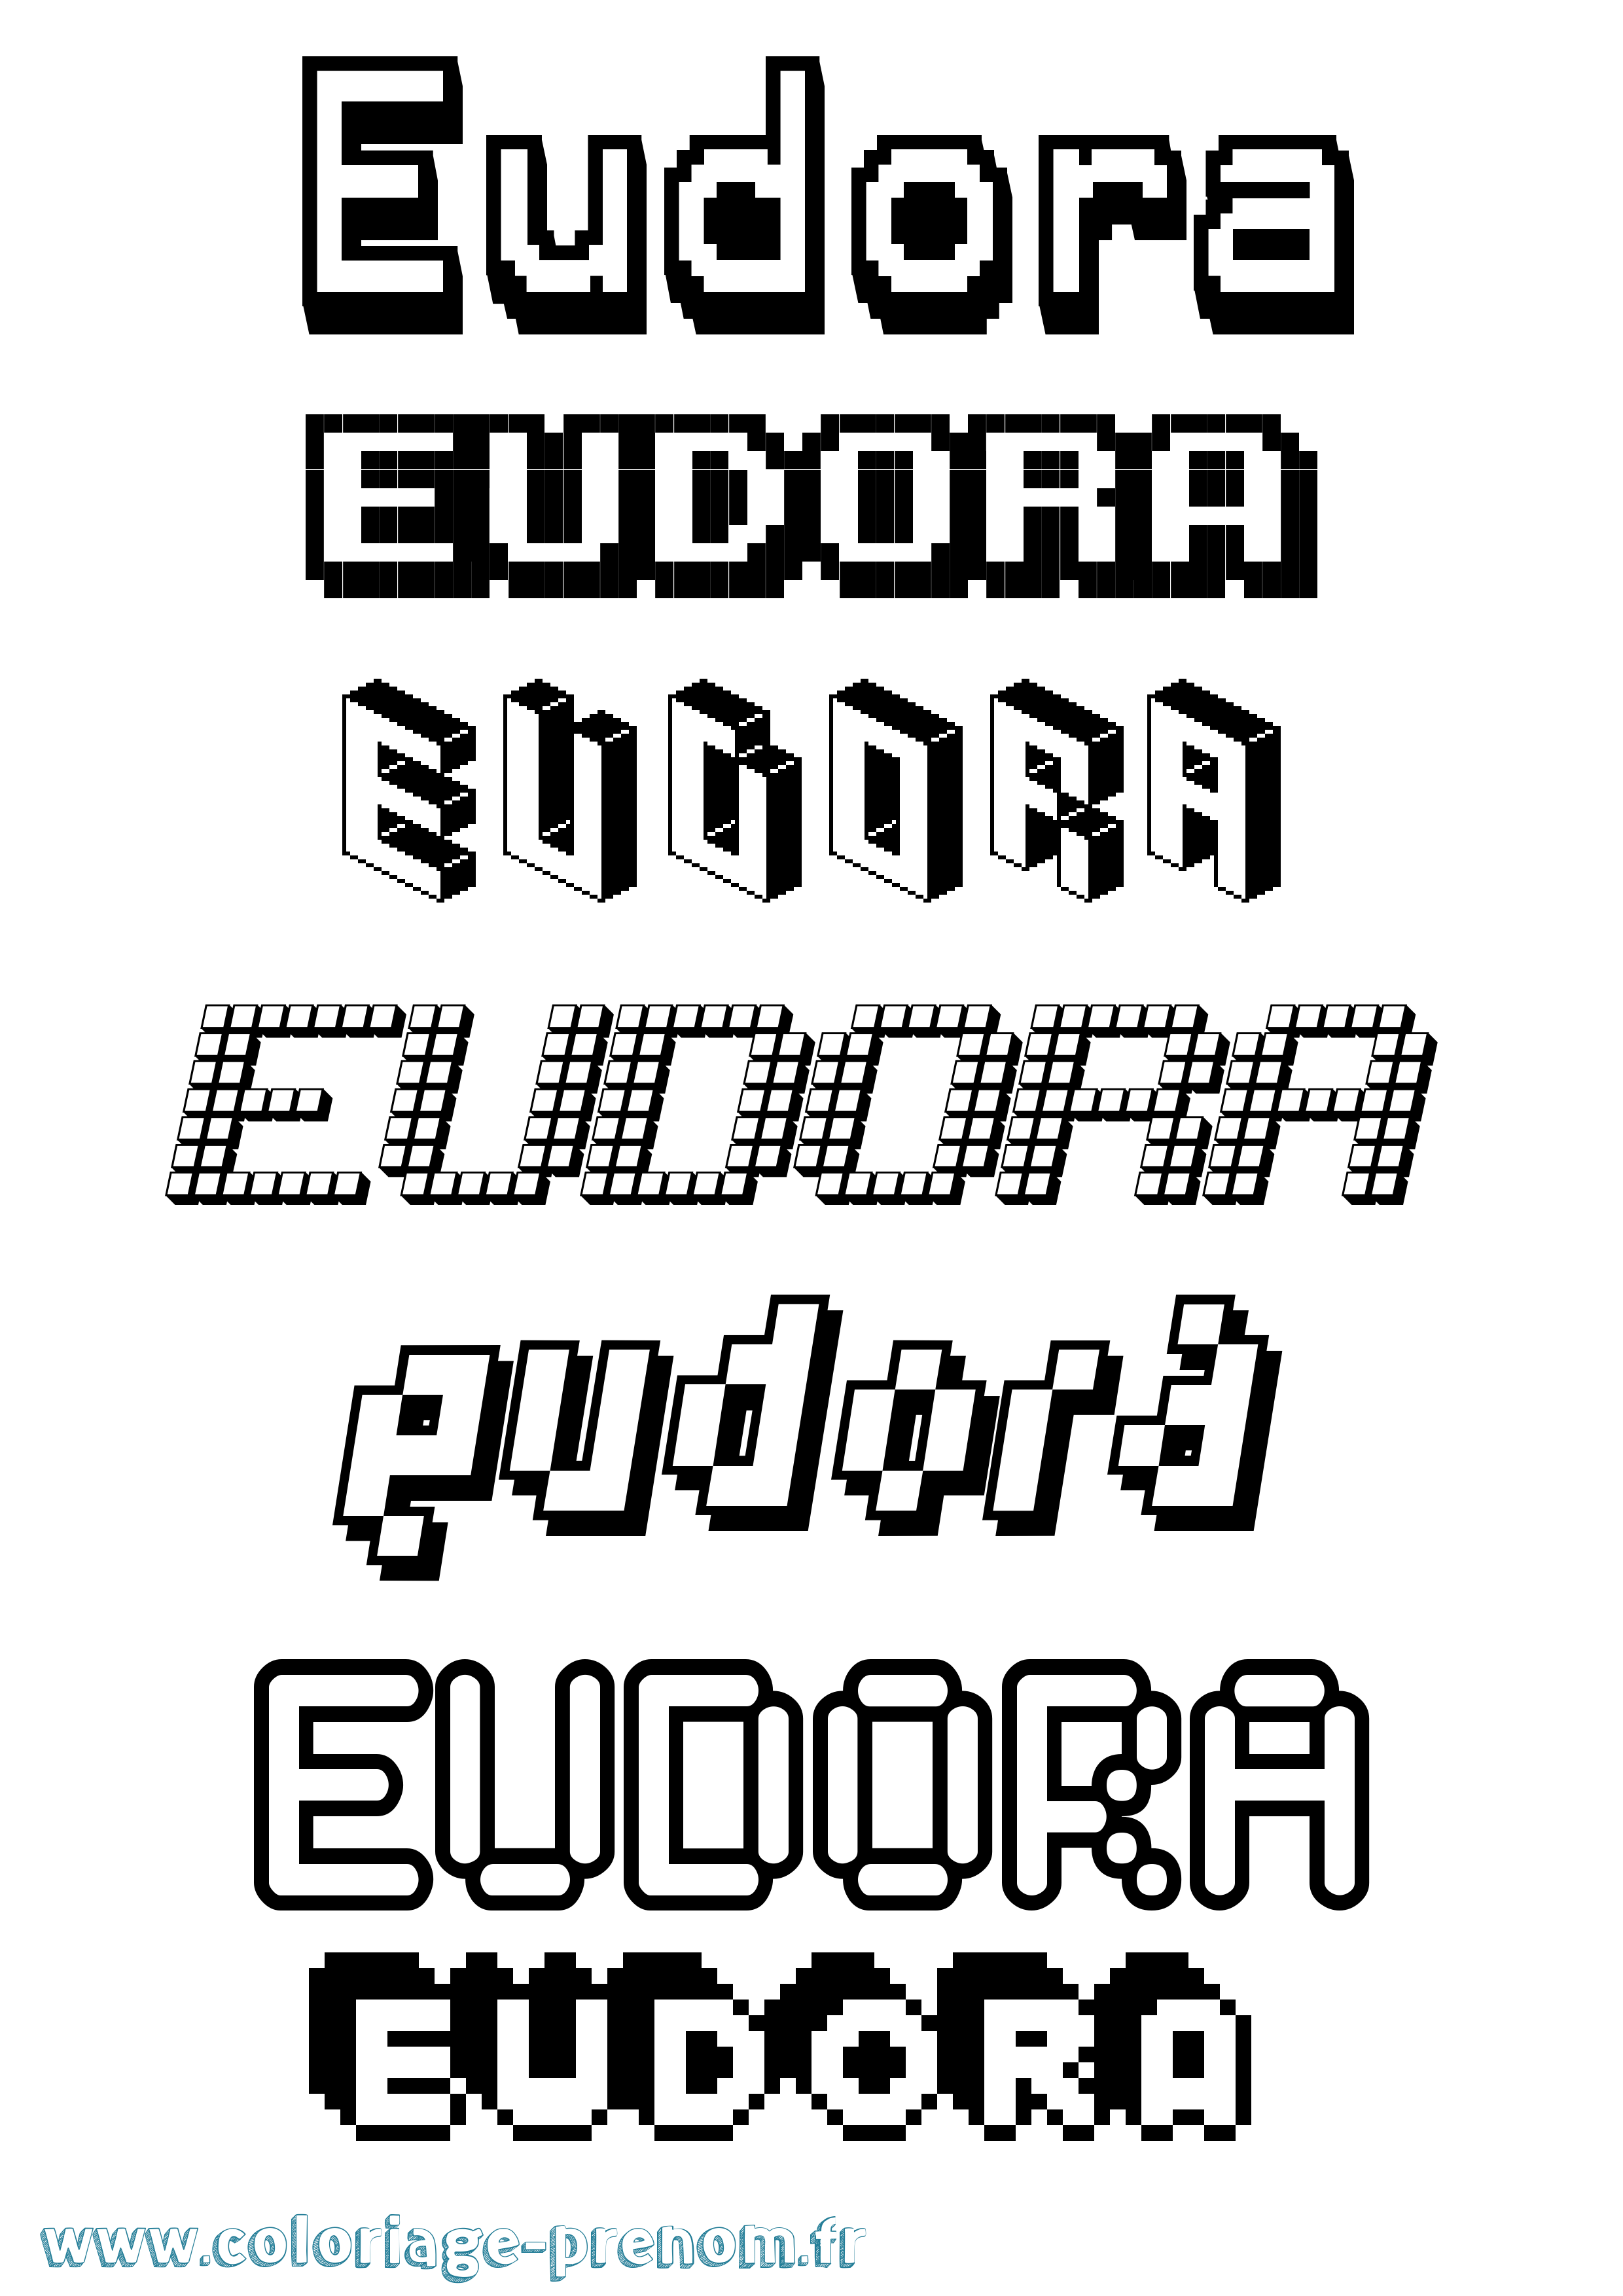 Coloriage prénom Eudora Pixel